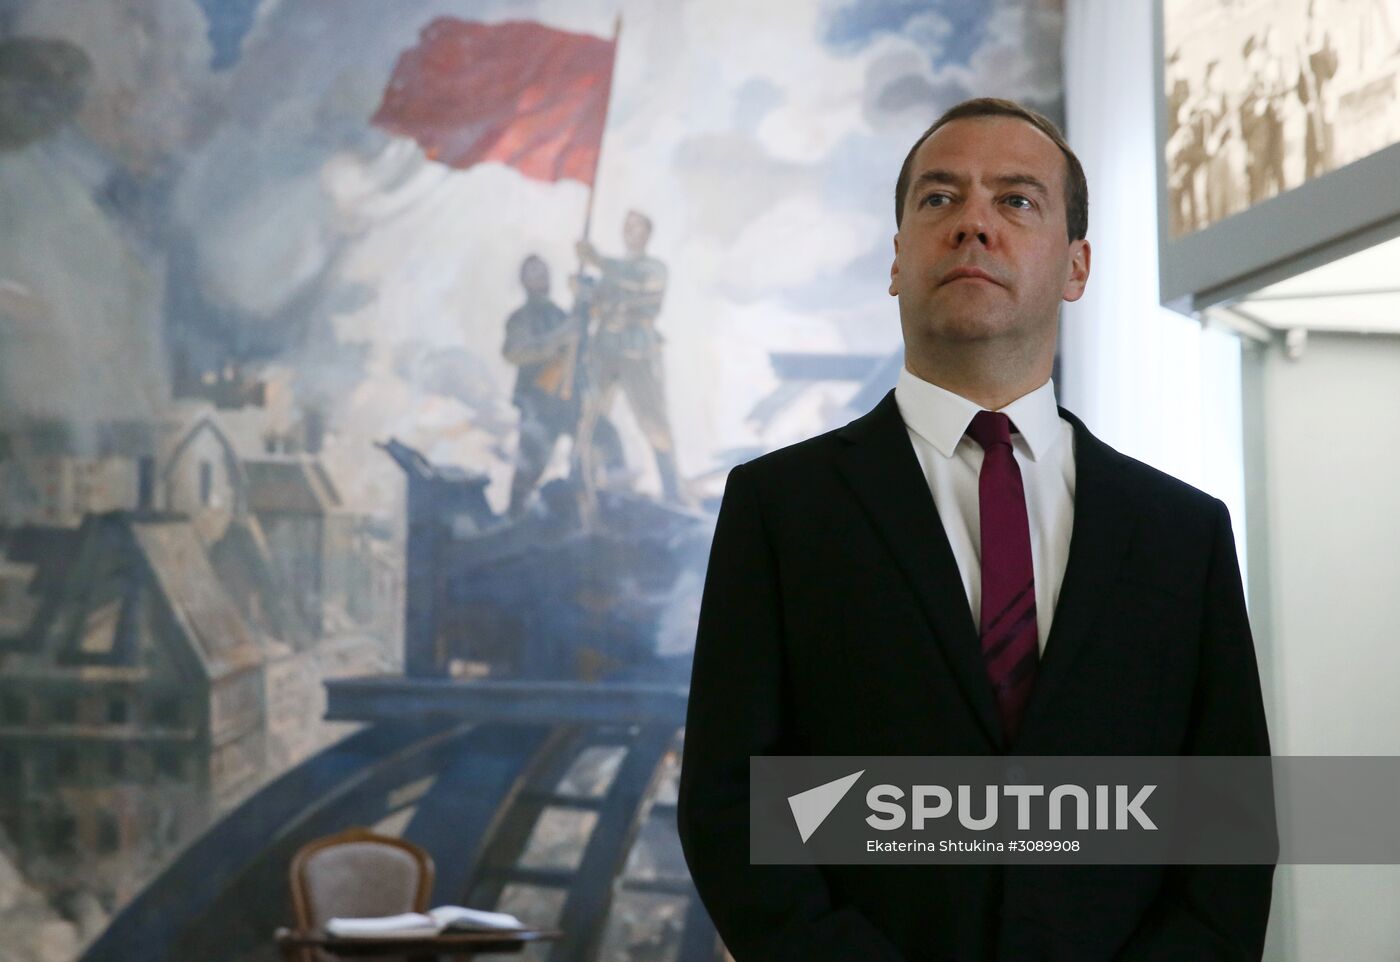 Prime Minister Dmitry Medvedev's working visit to Smolensk